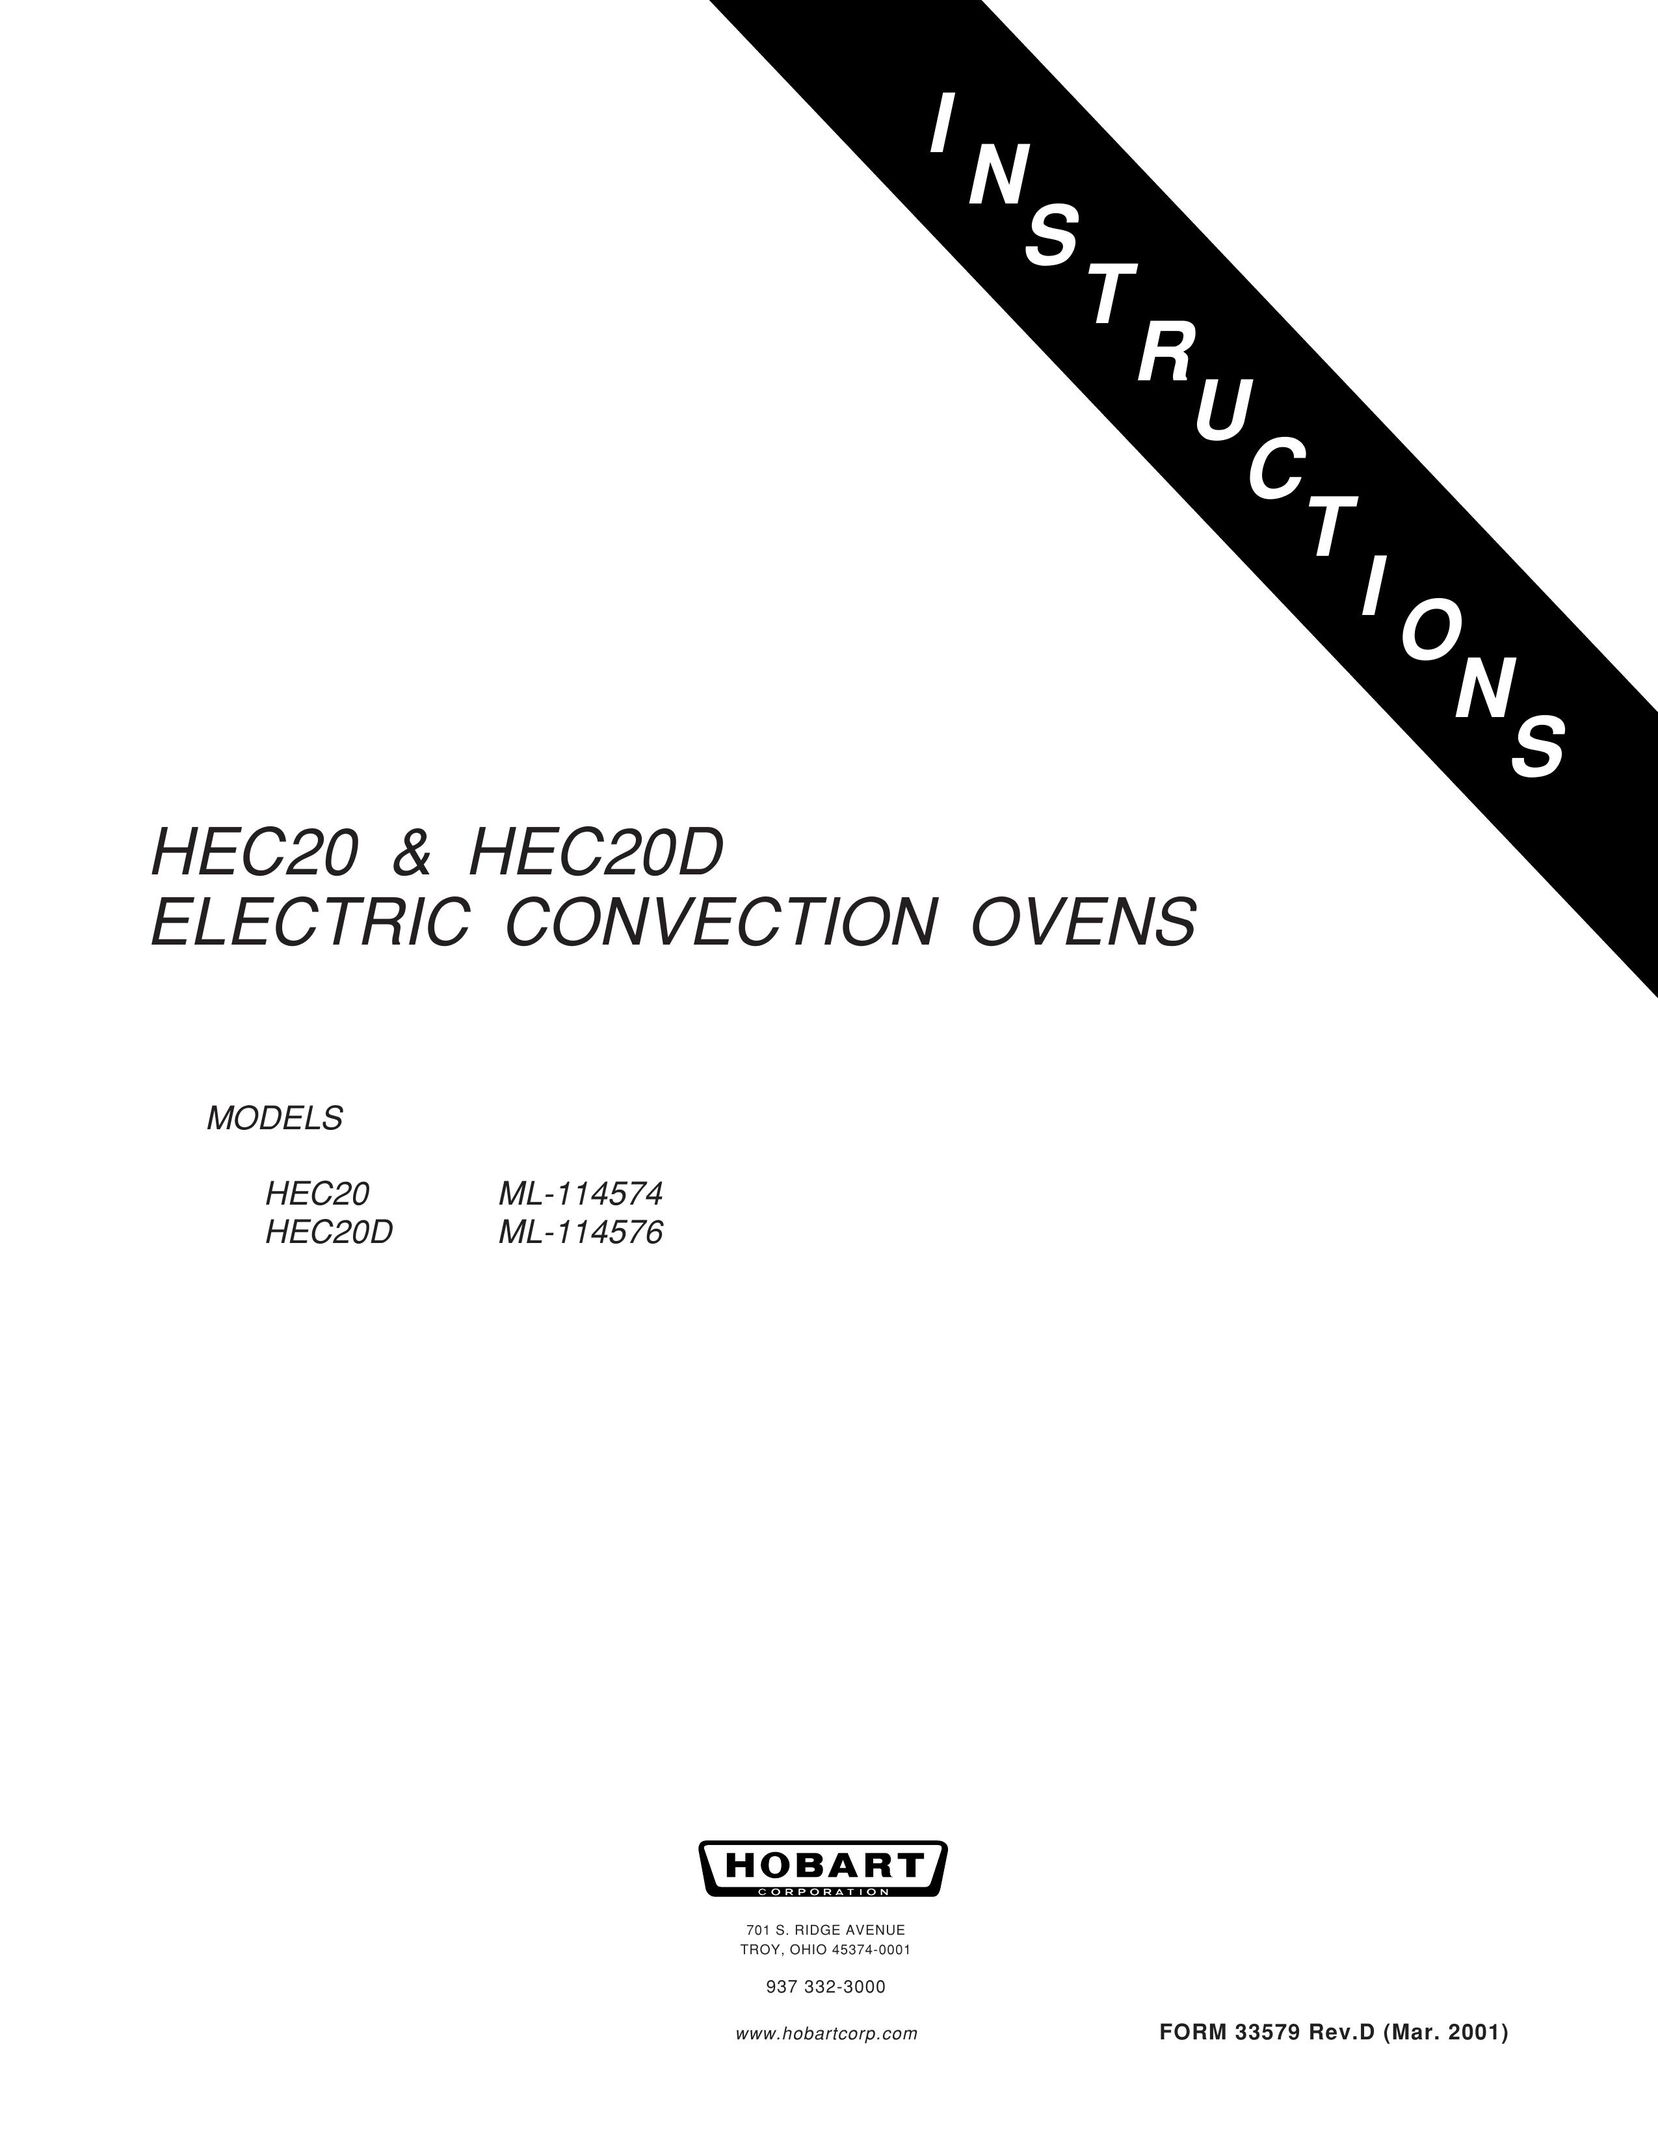 Hobart HEC20D ML-114576 Oven User Manual